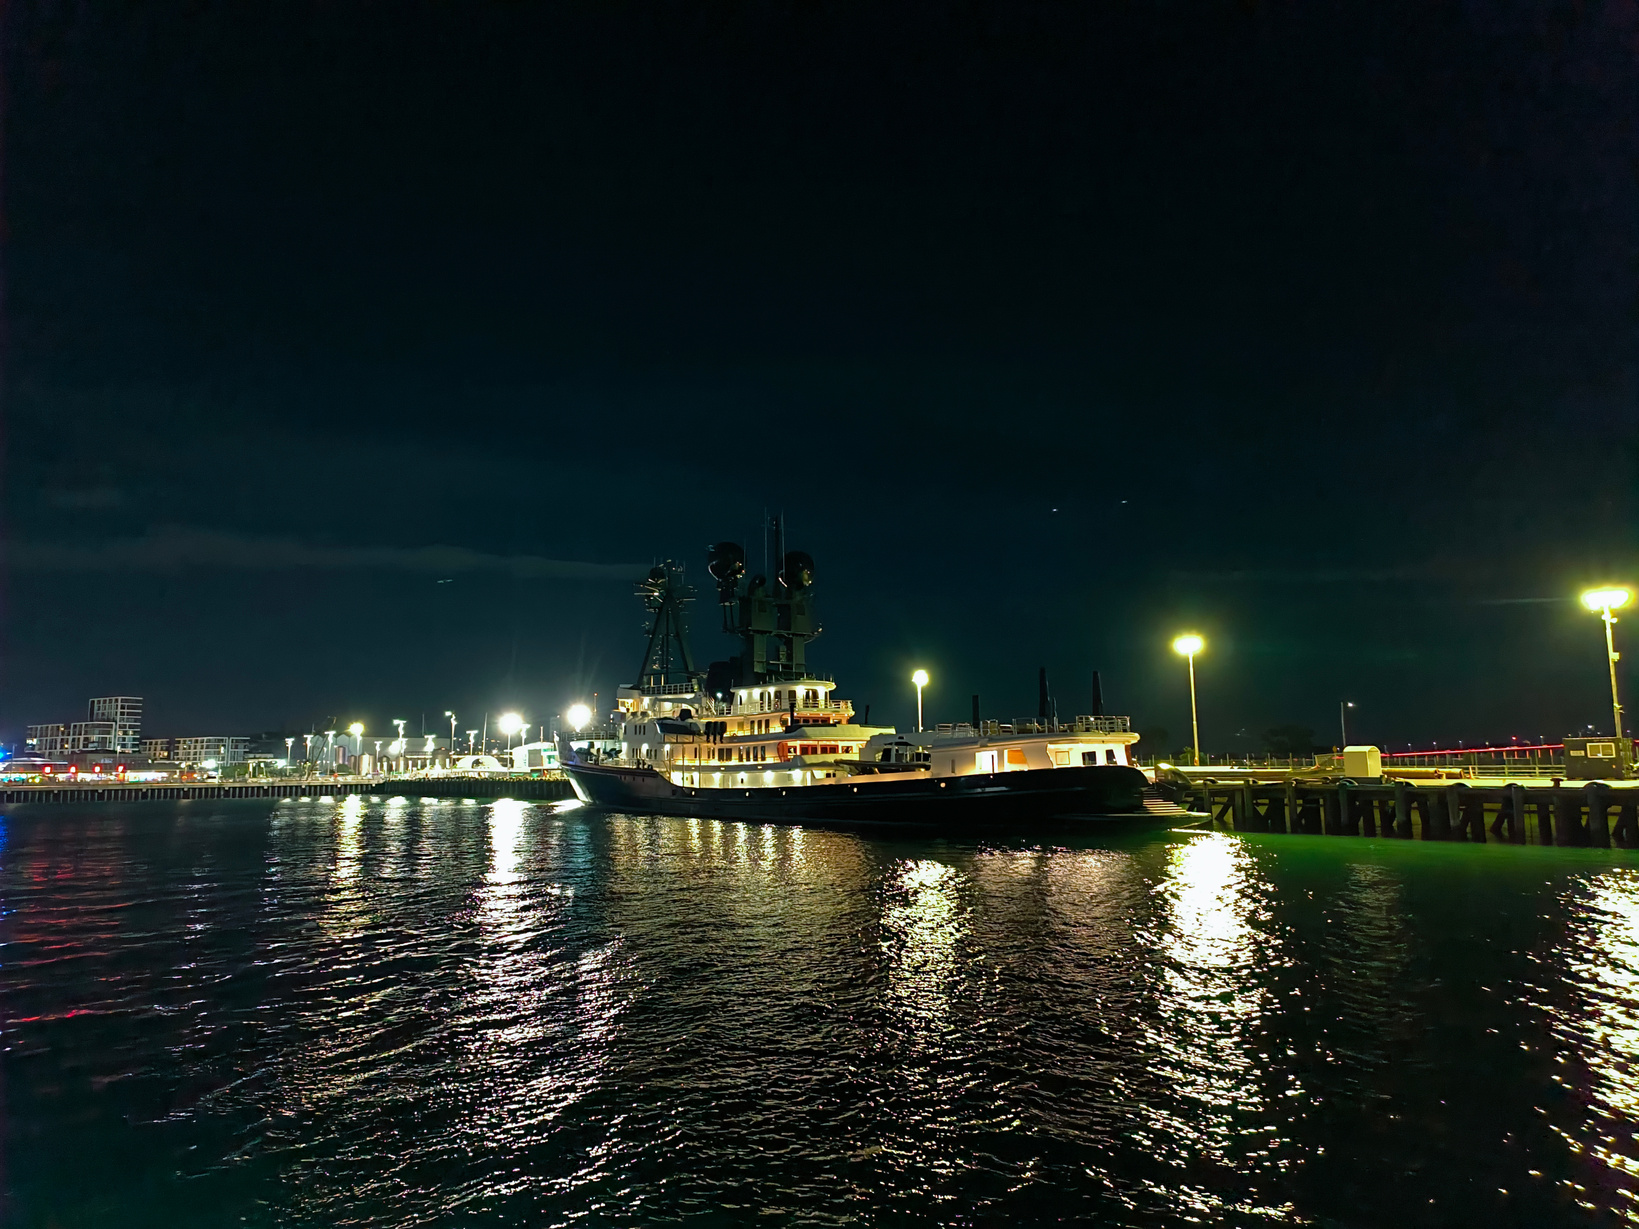 Vessel "Arctic" along side The Wynyard Quarter Docks, Auckland NZ